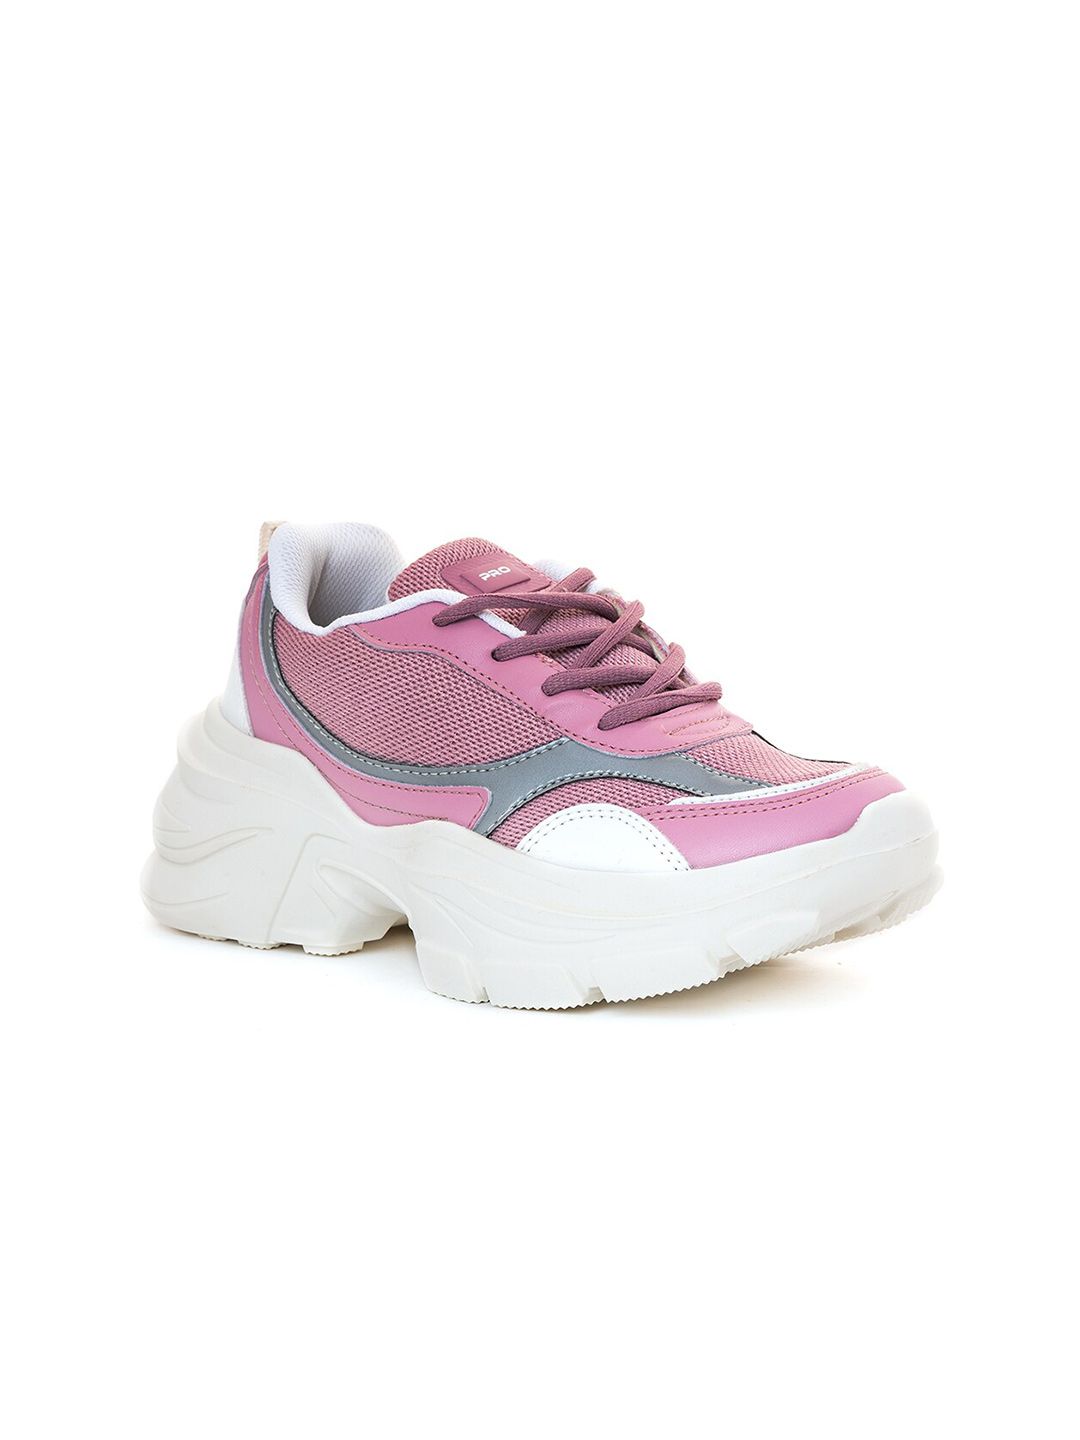 Khadims Women Pink Textile Walking Shoes Price in India